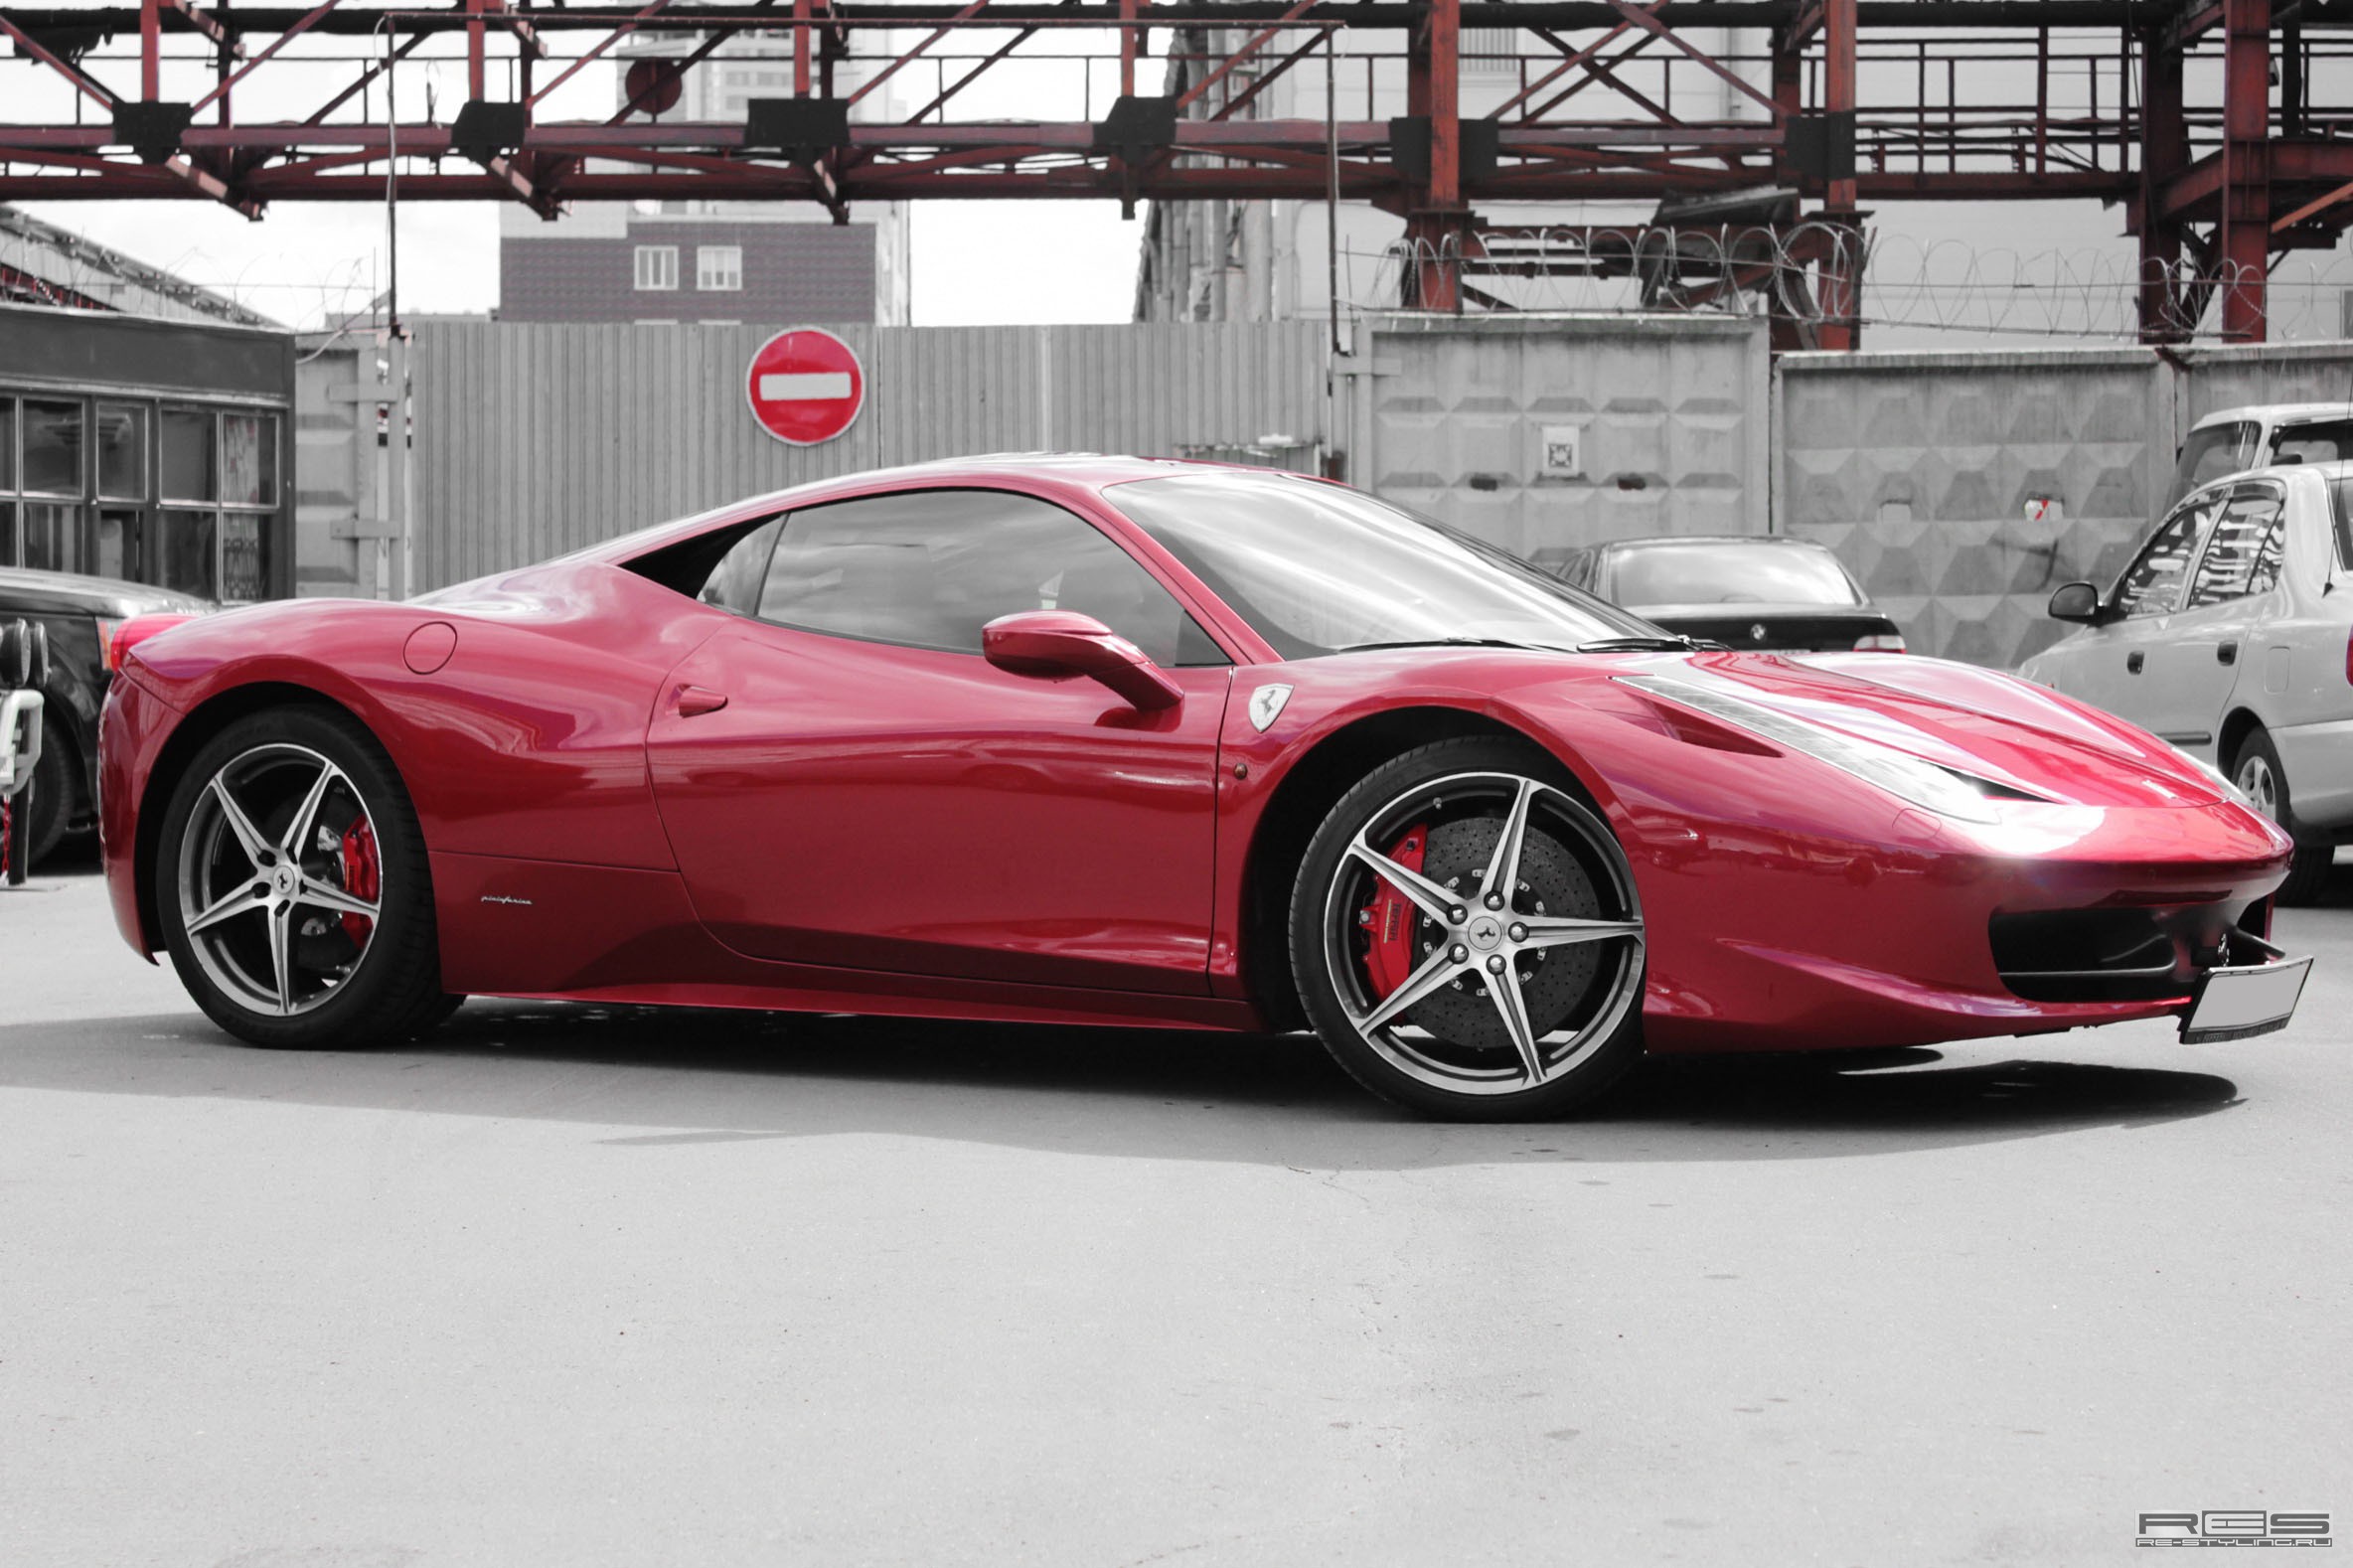 Gemaakt om op te vallen: roodchromen Ferrari 458 Italia